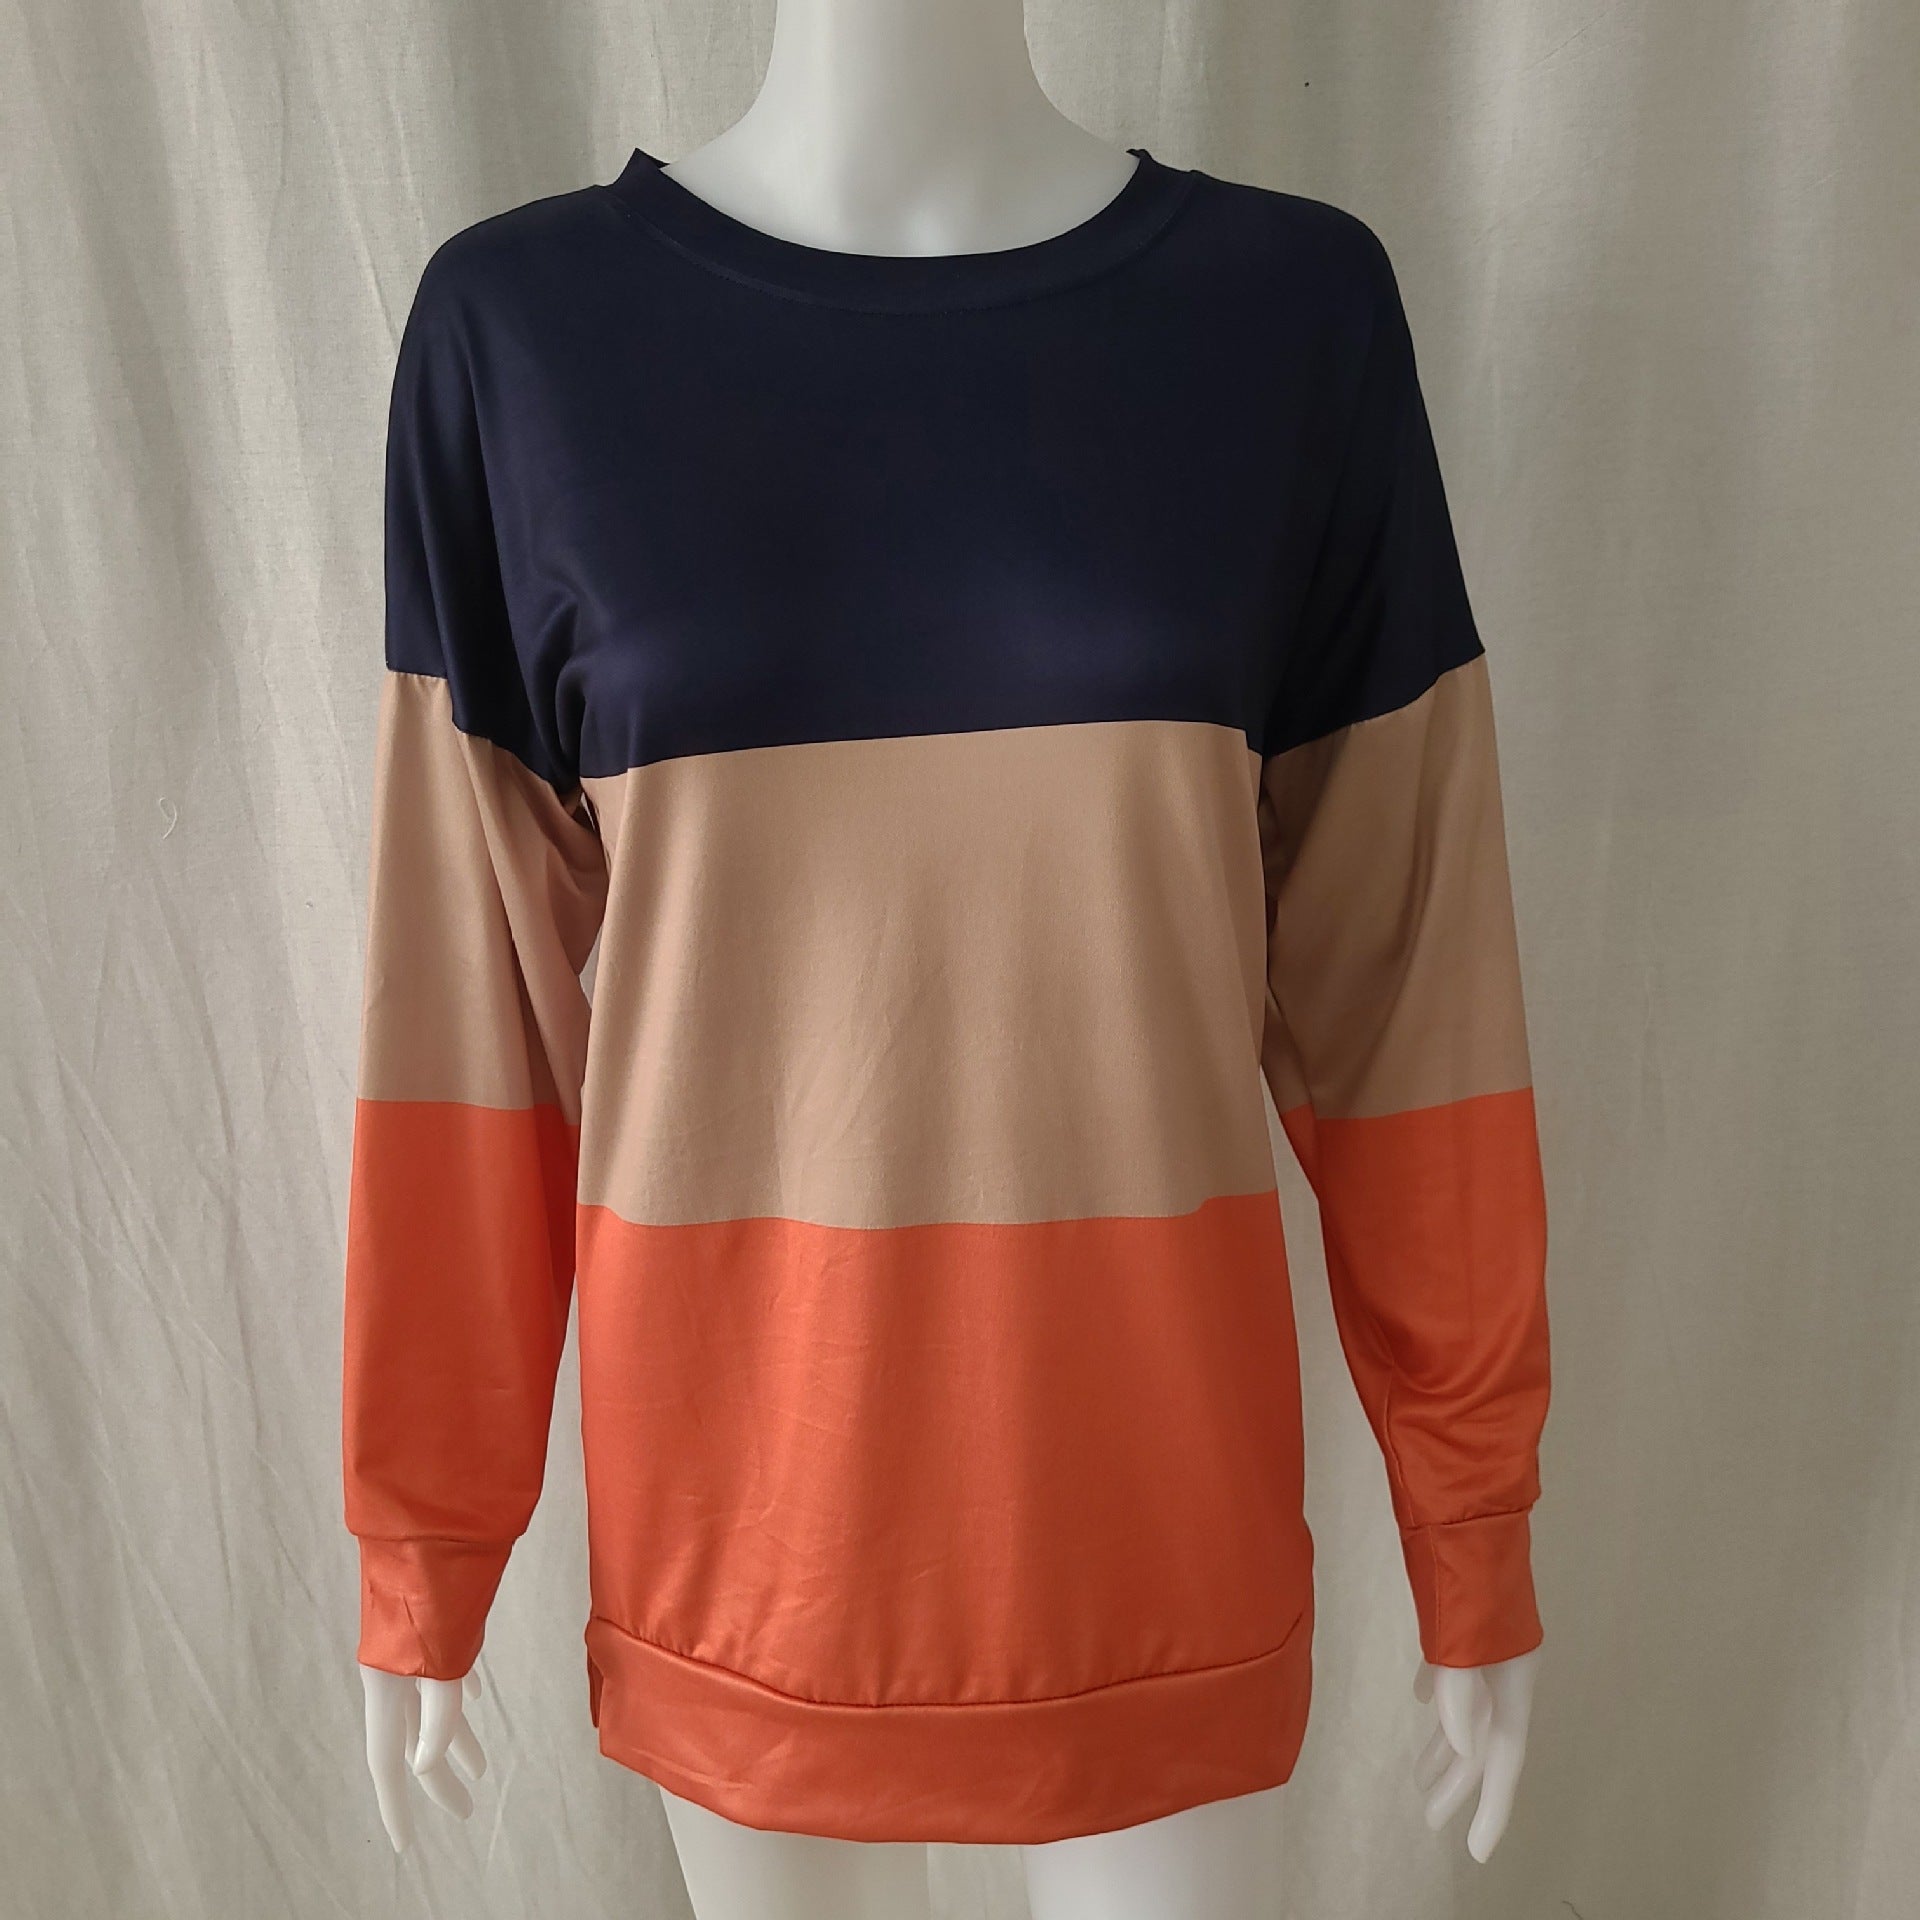 Women's Sweater Urban Leisure Stitching Color Top Round Neck Long Sleeve Loose Sweatshirt